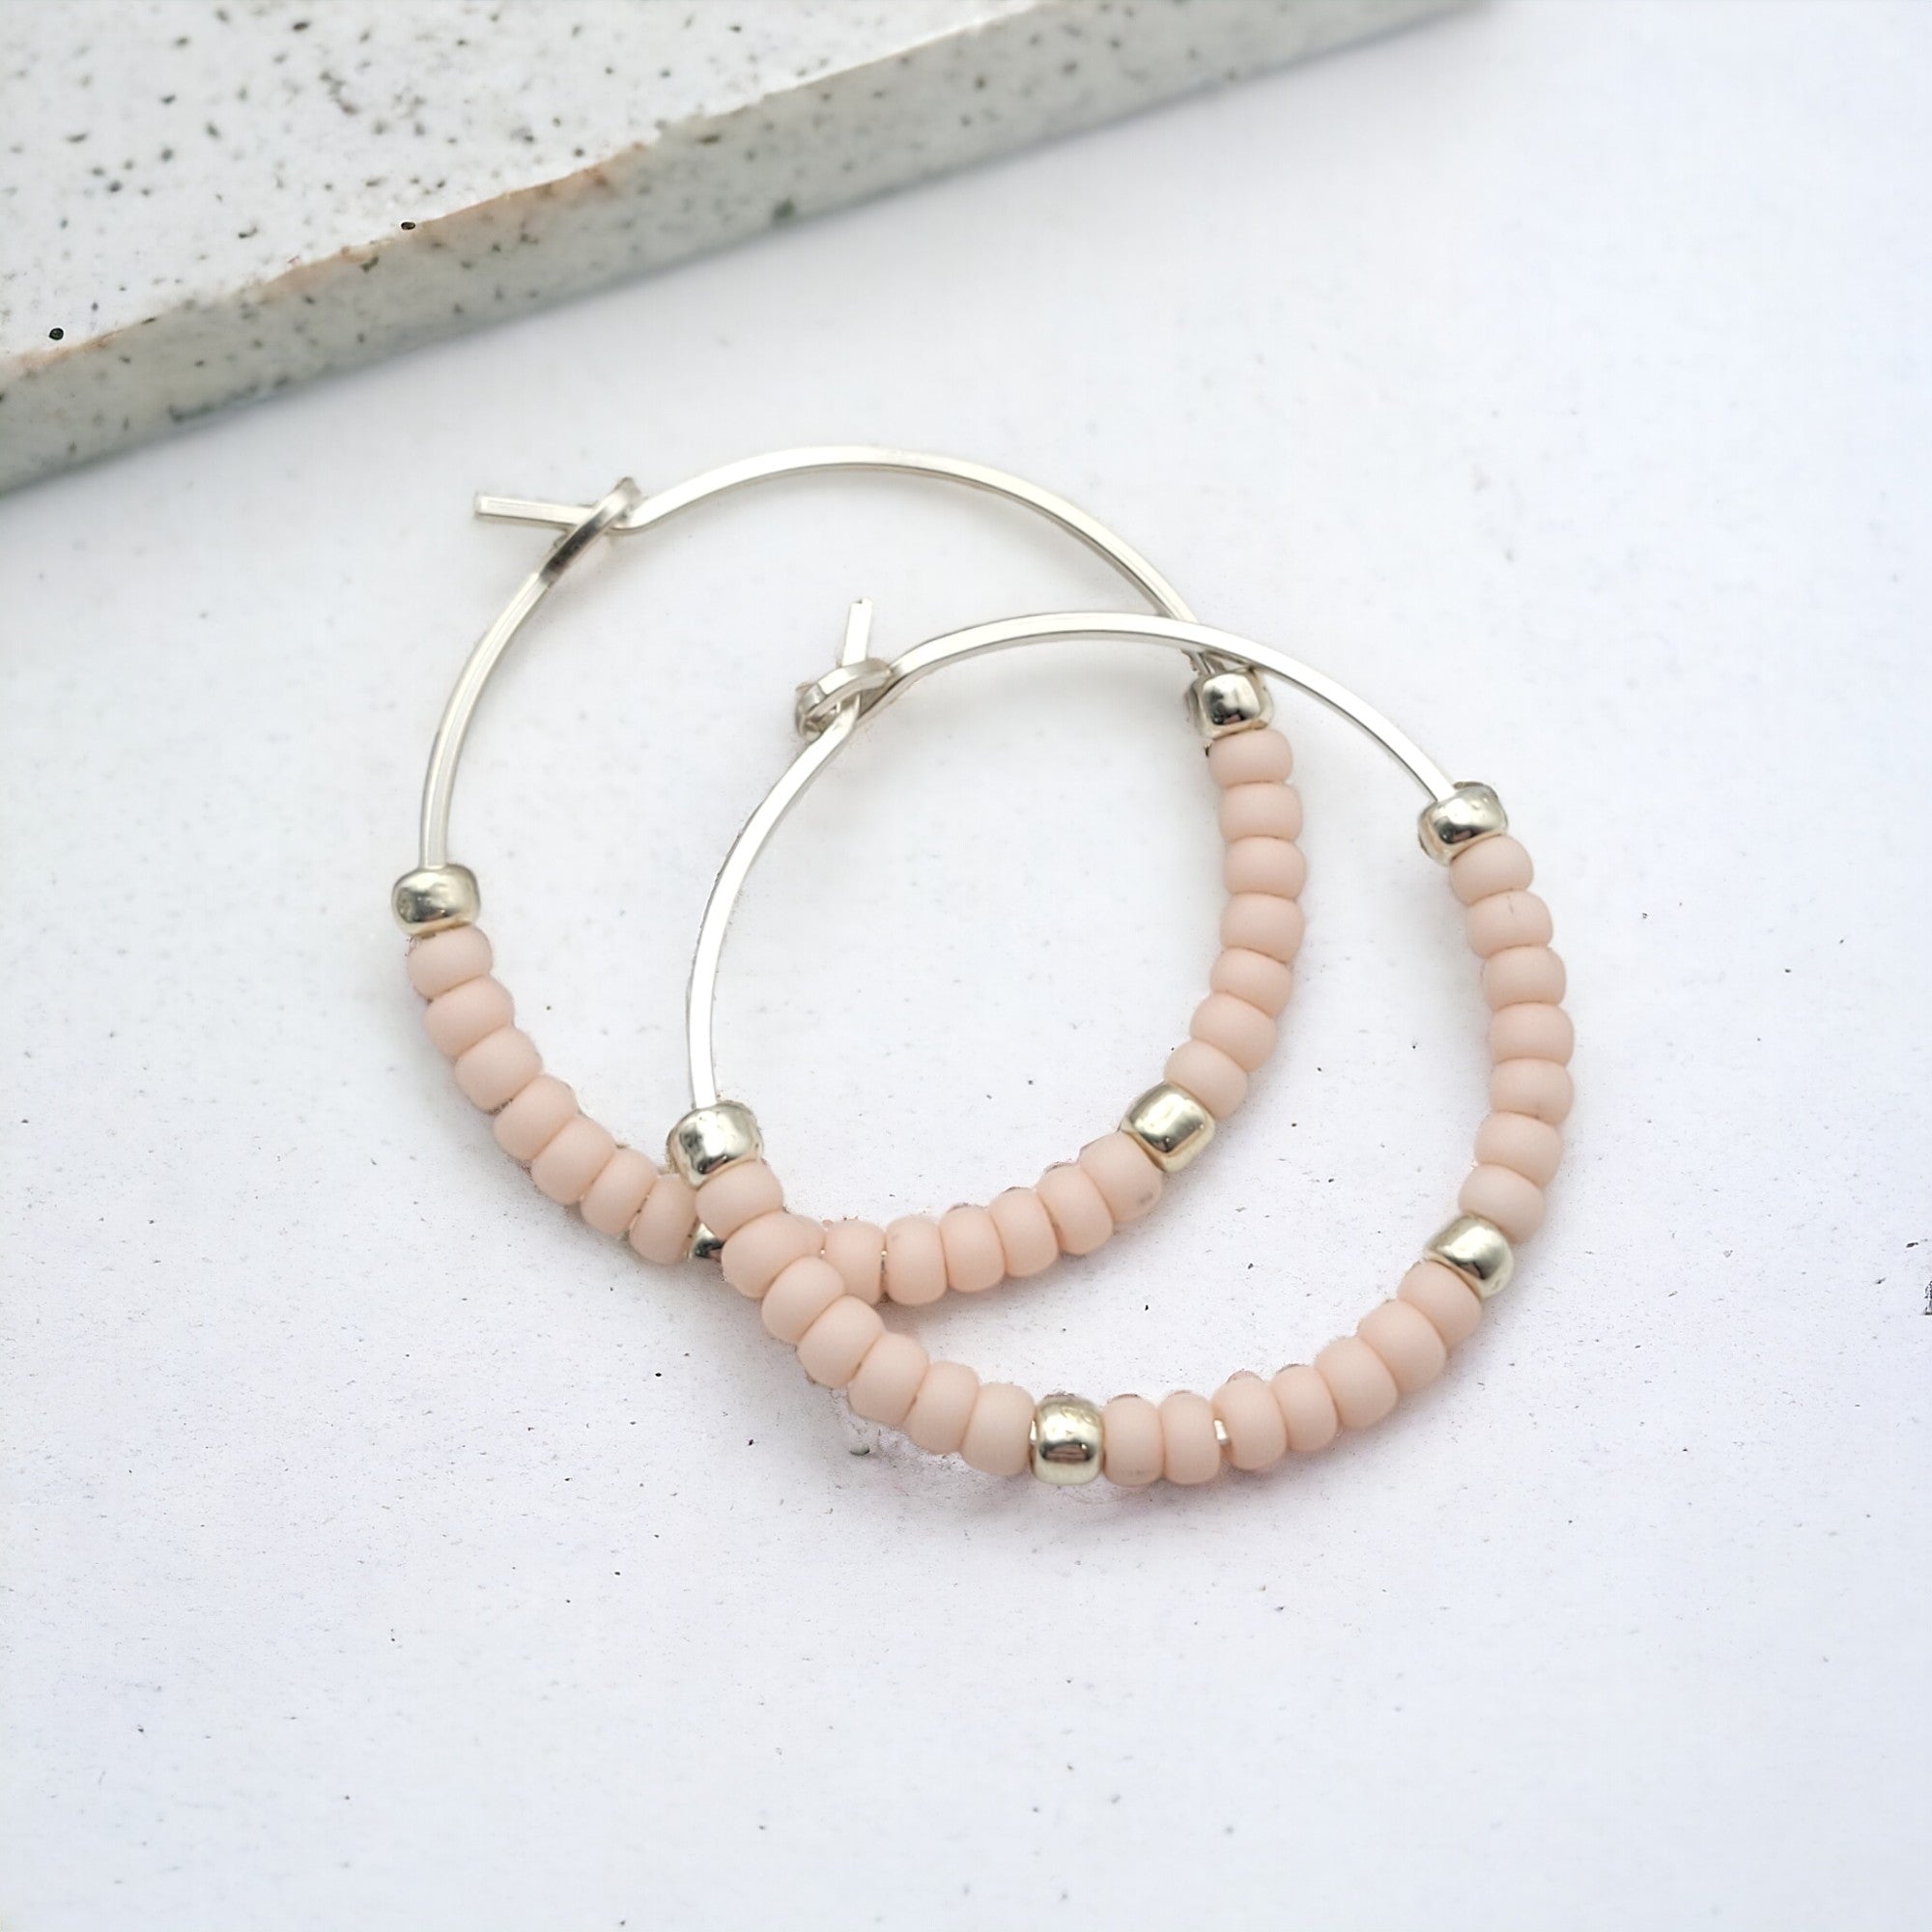 Boho - Silver Hoops with Pale Pink Beads Earrings Bijou by SAM   